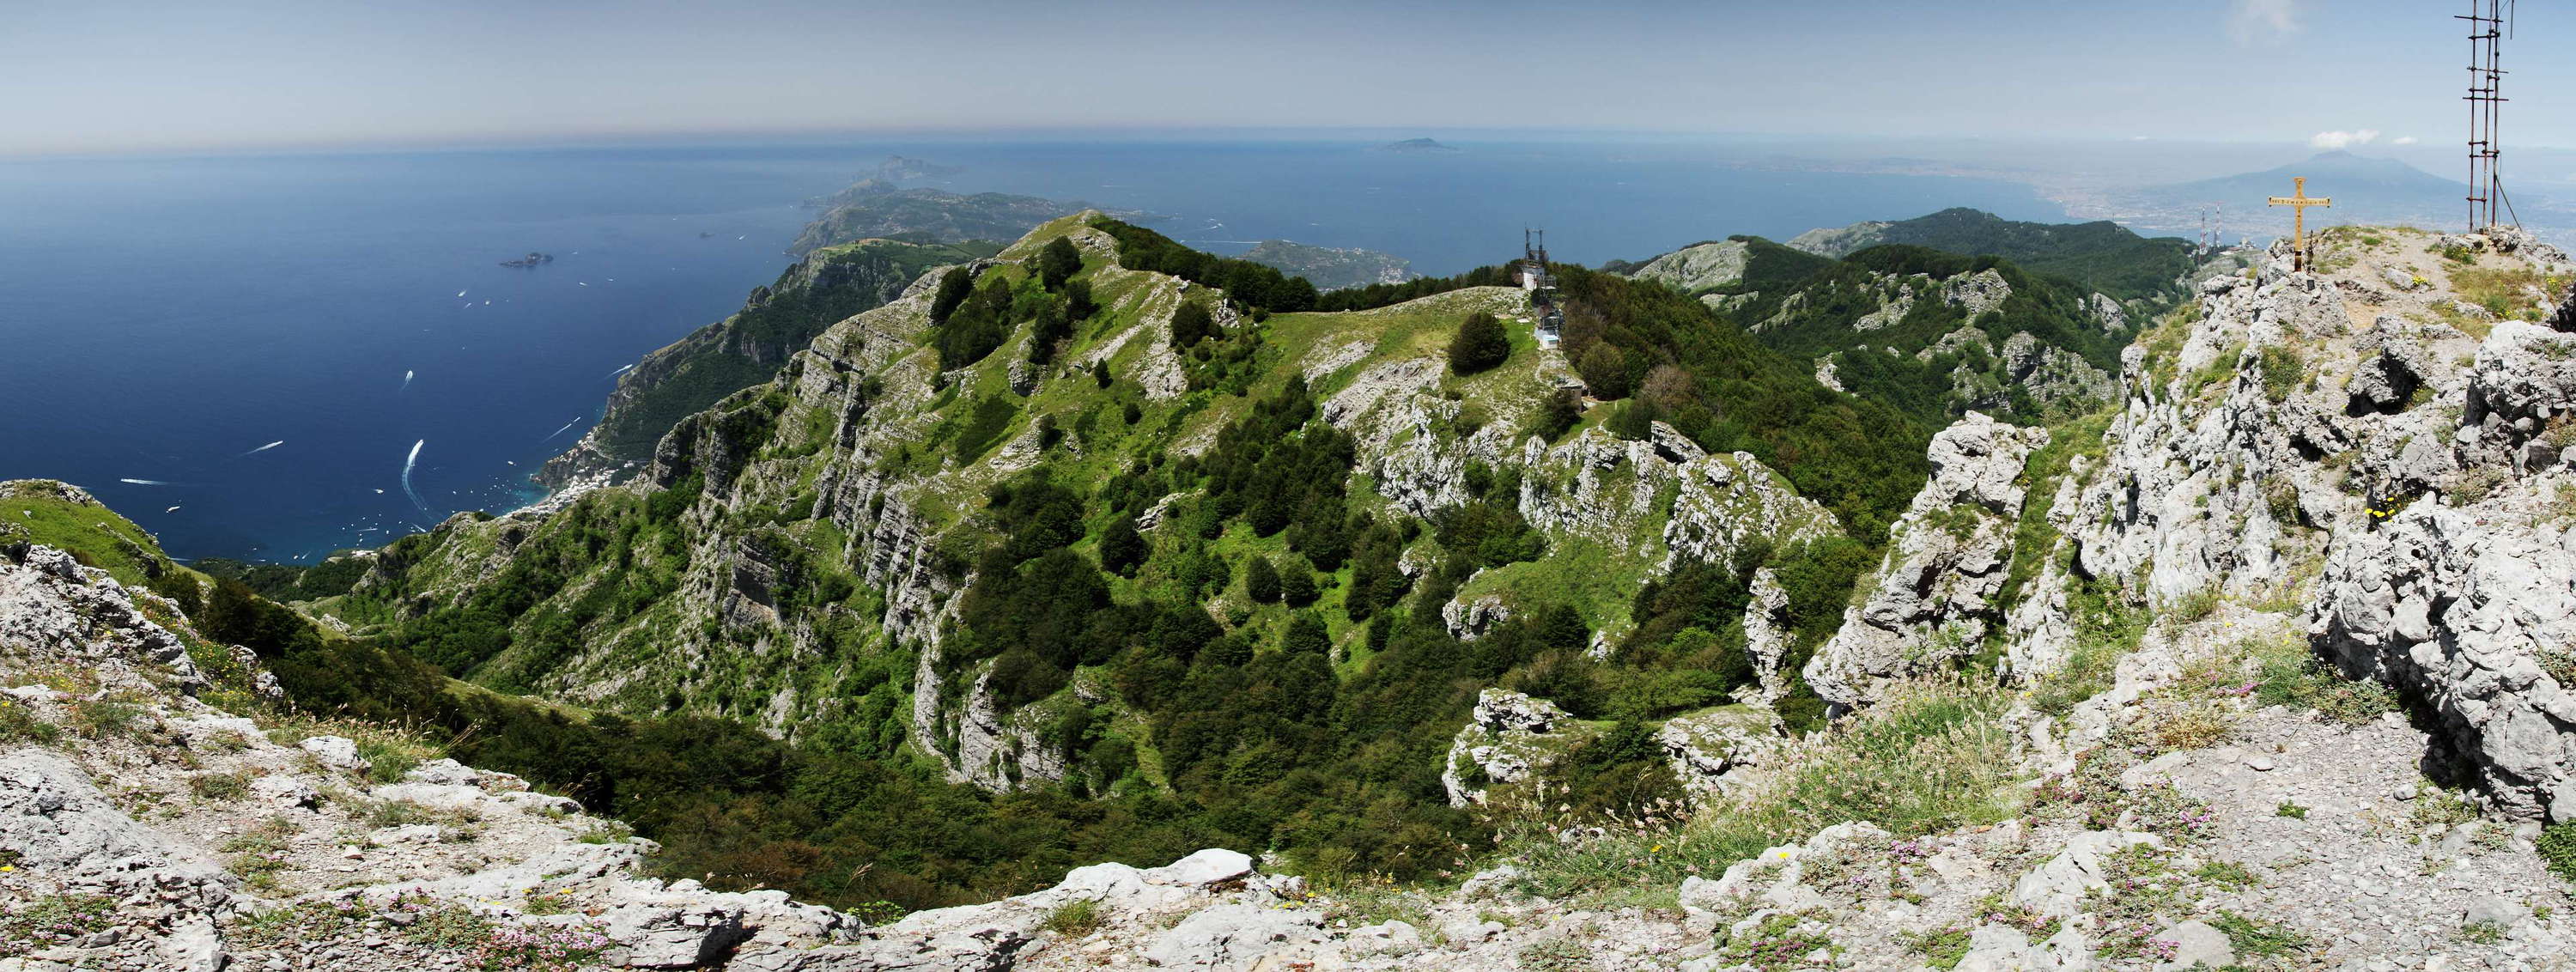 Monti Lattari and Sorrento Peninsula